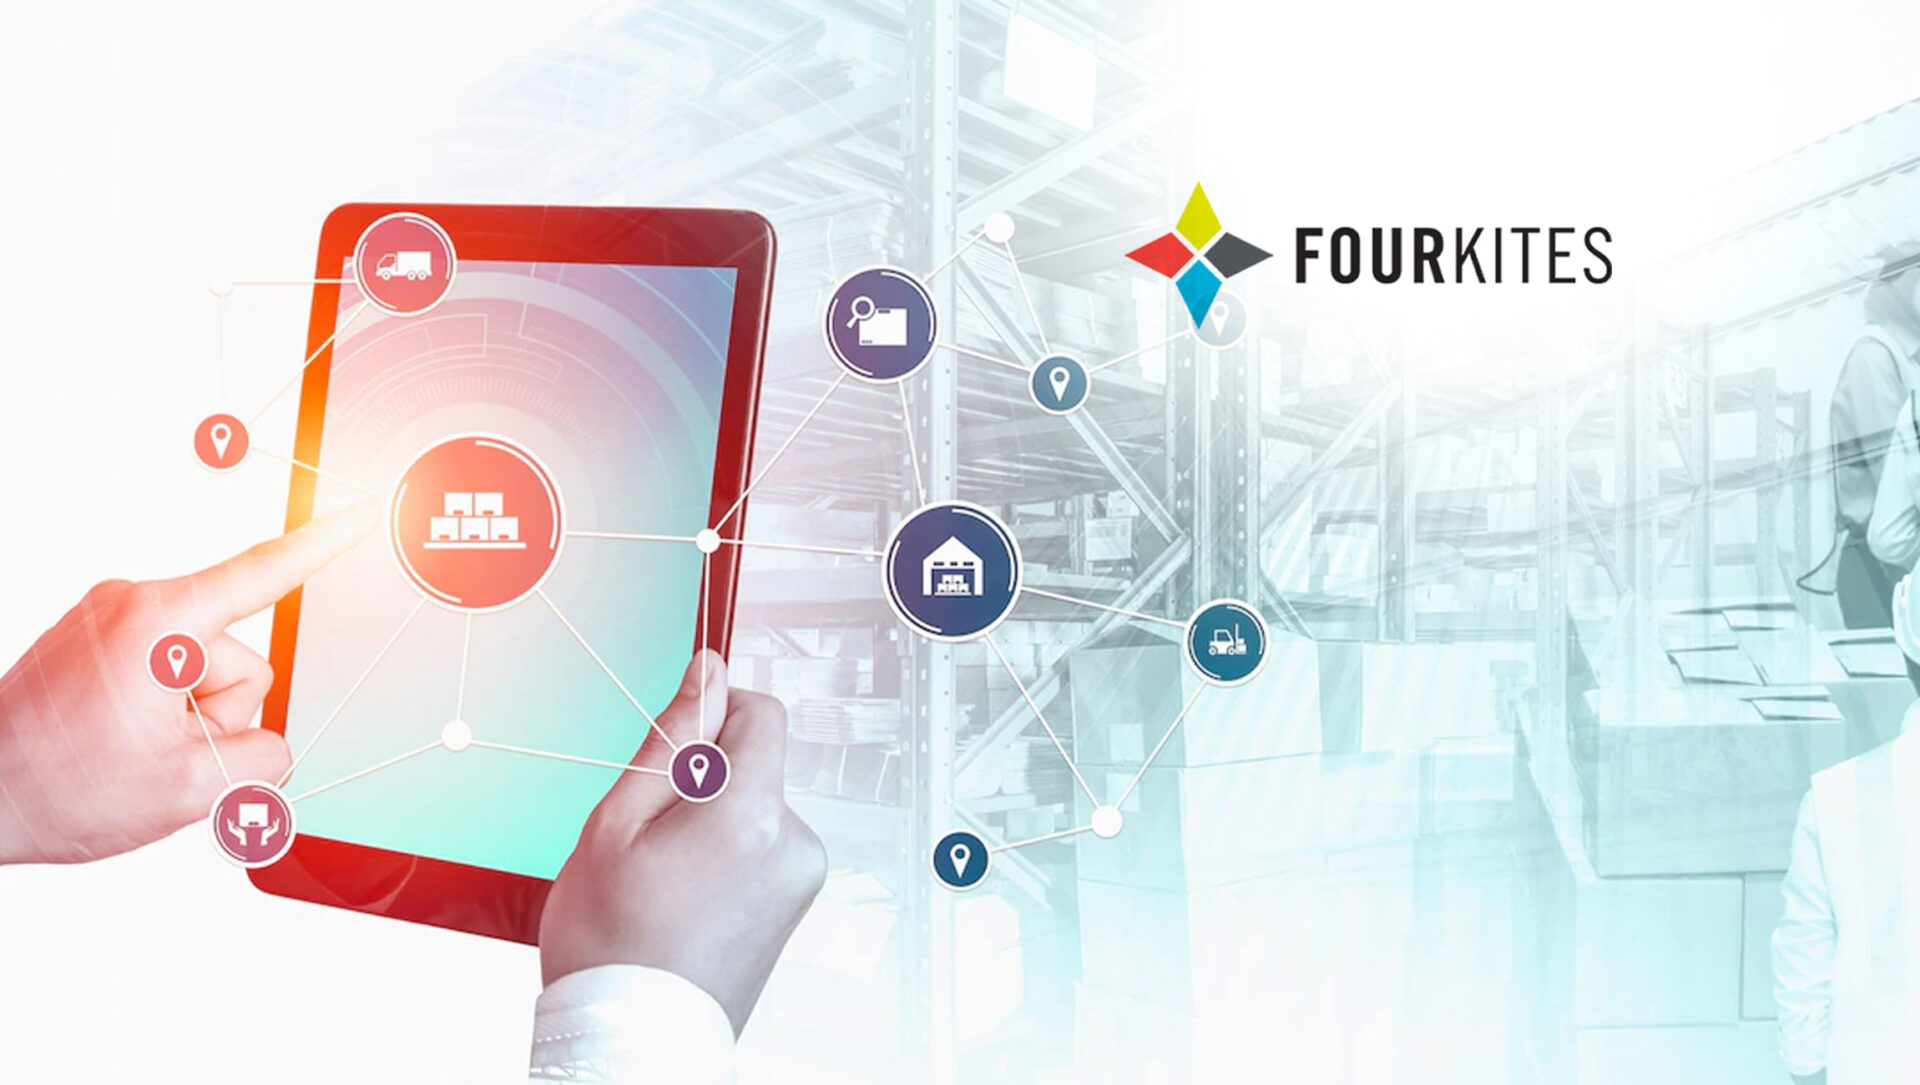 Fourkites Business Model | The Brand Hopper